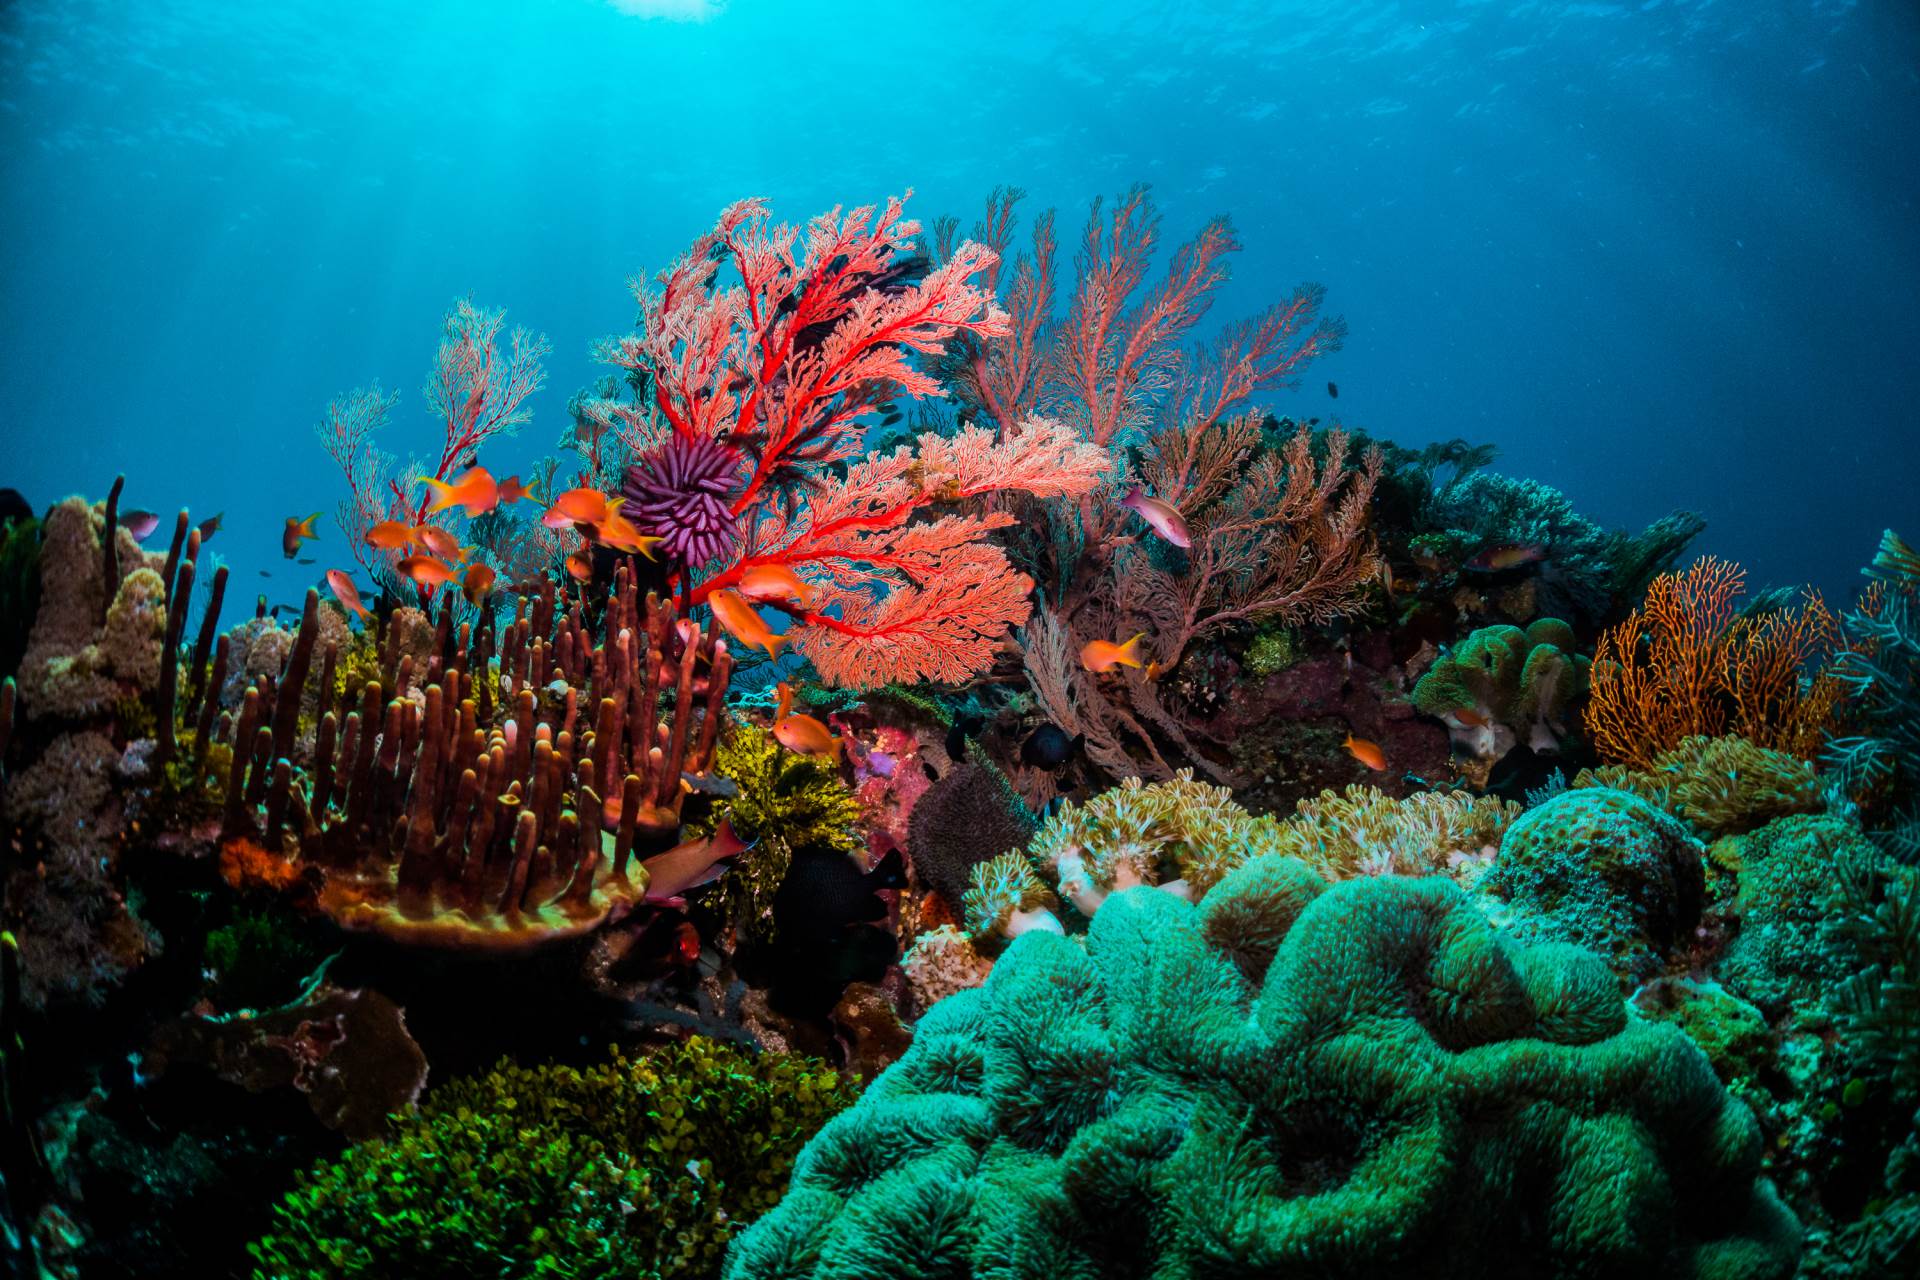  SPAS ZA MORSKI ŽIVOT: Presađivanjem korala prave veštačke koralne grebene 